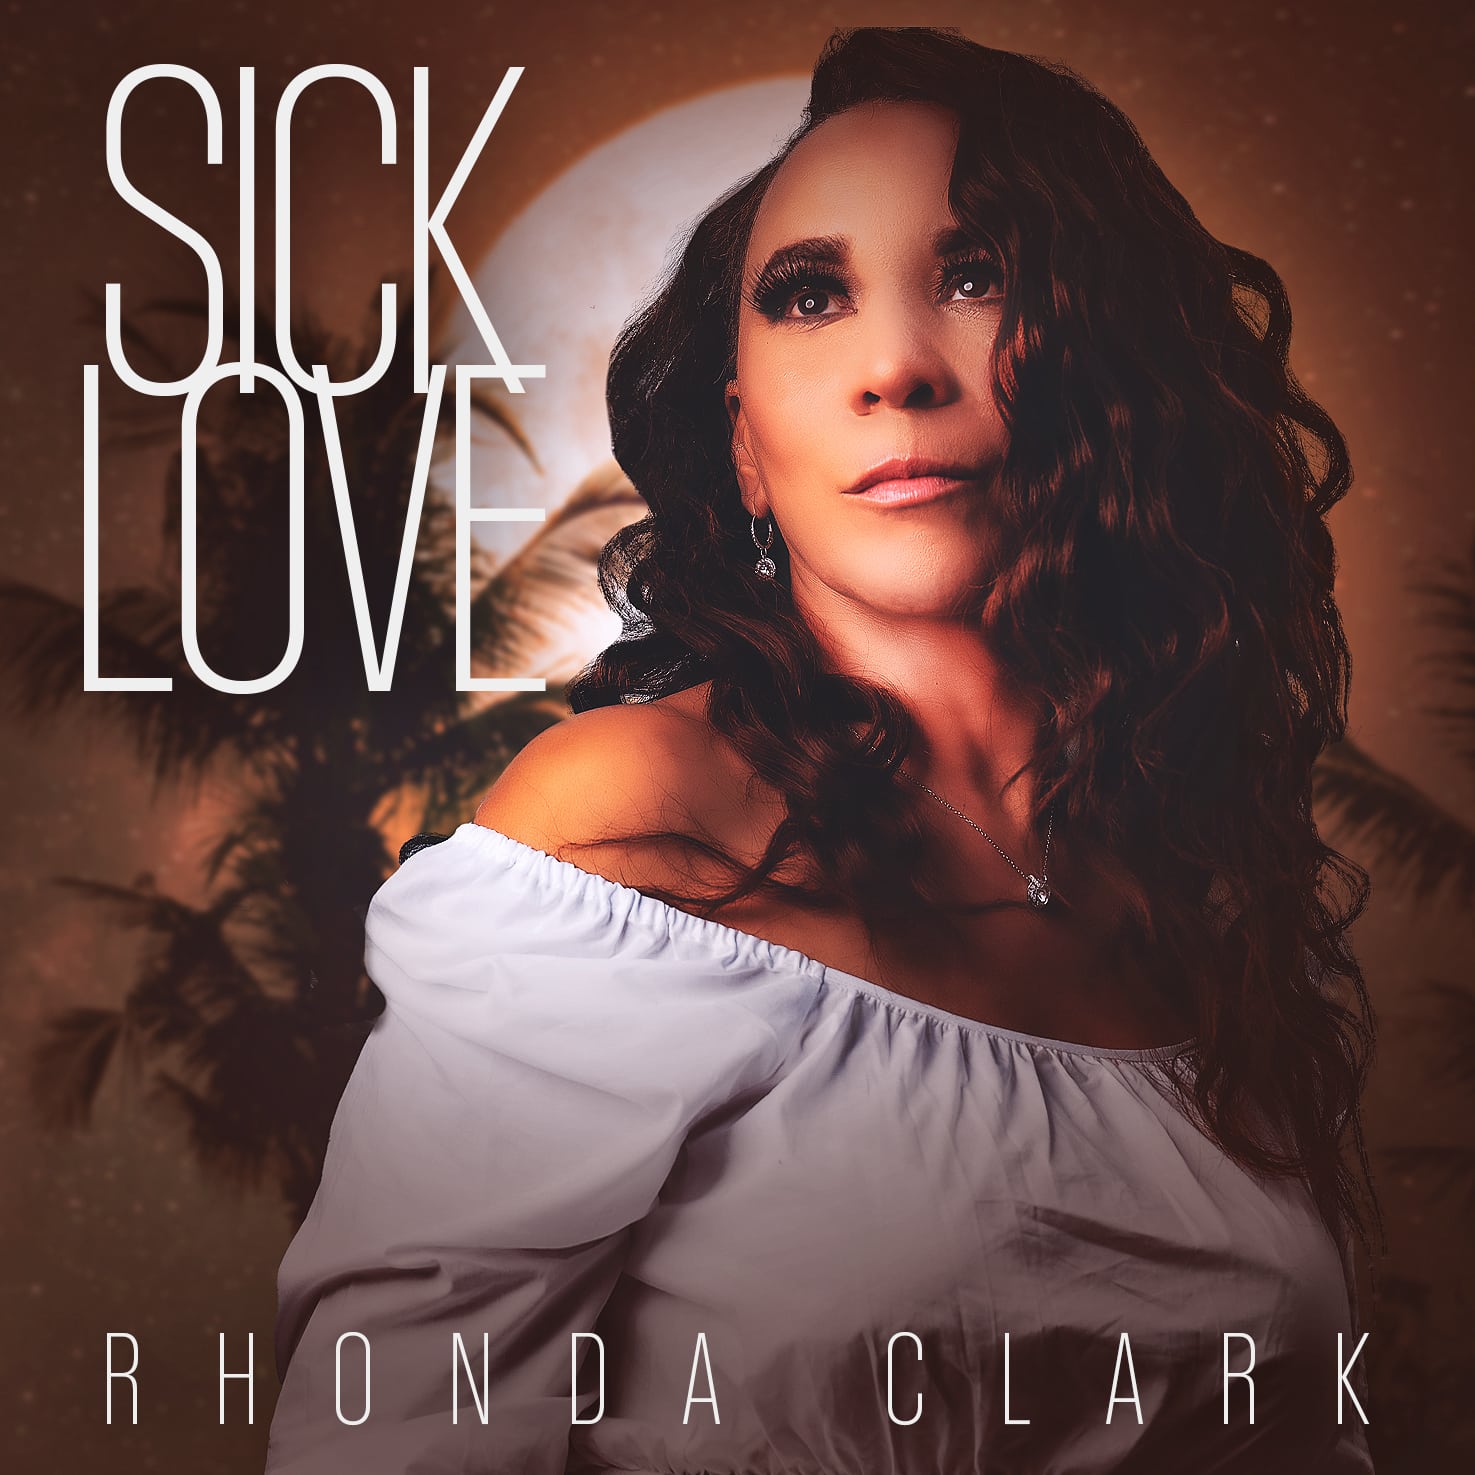 "Sick Love" - Rhonda Clark